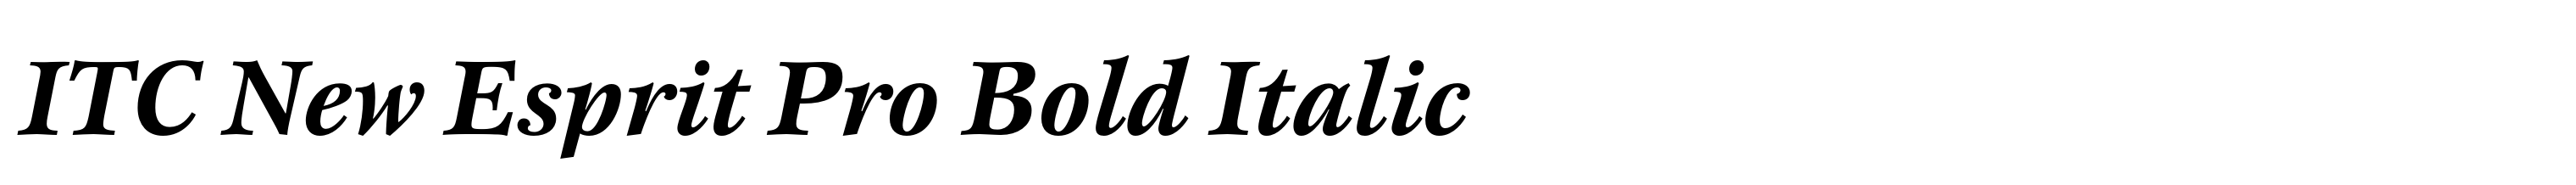 ITC New Esprit Pro Bold Italic